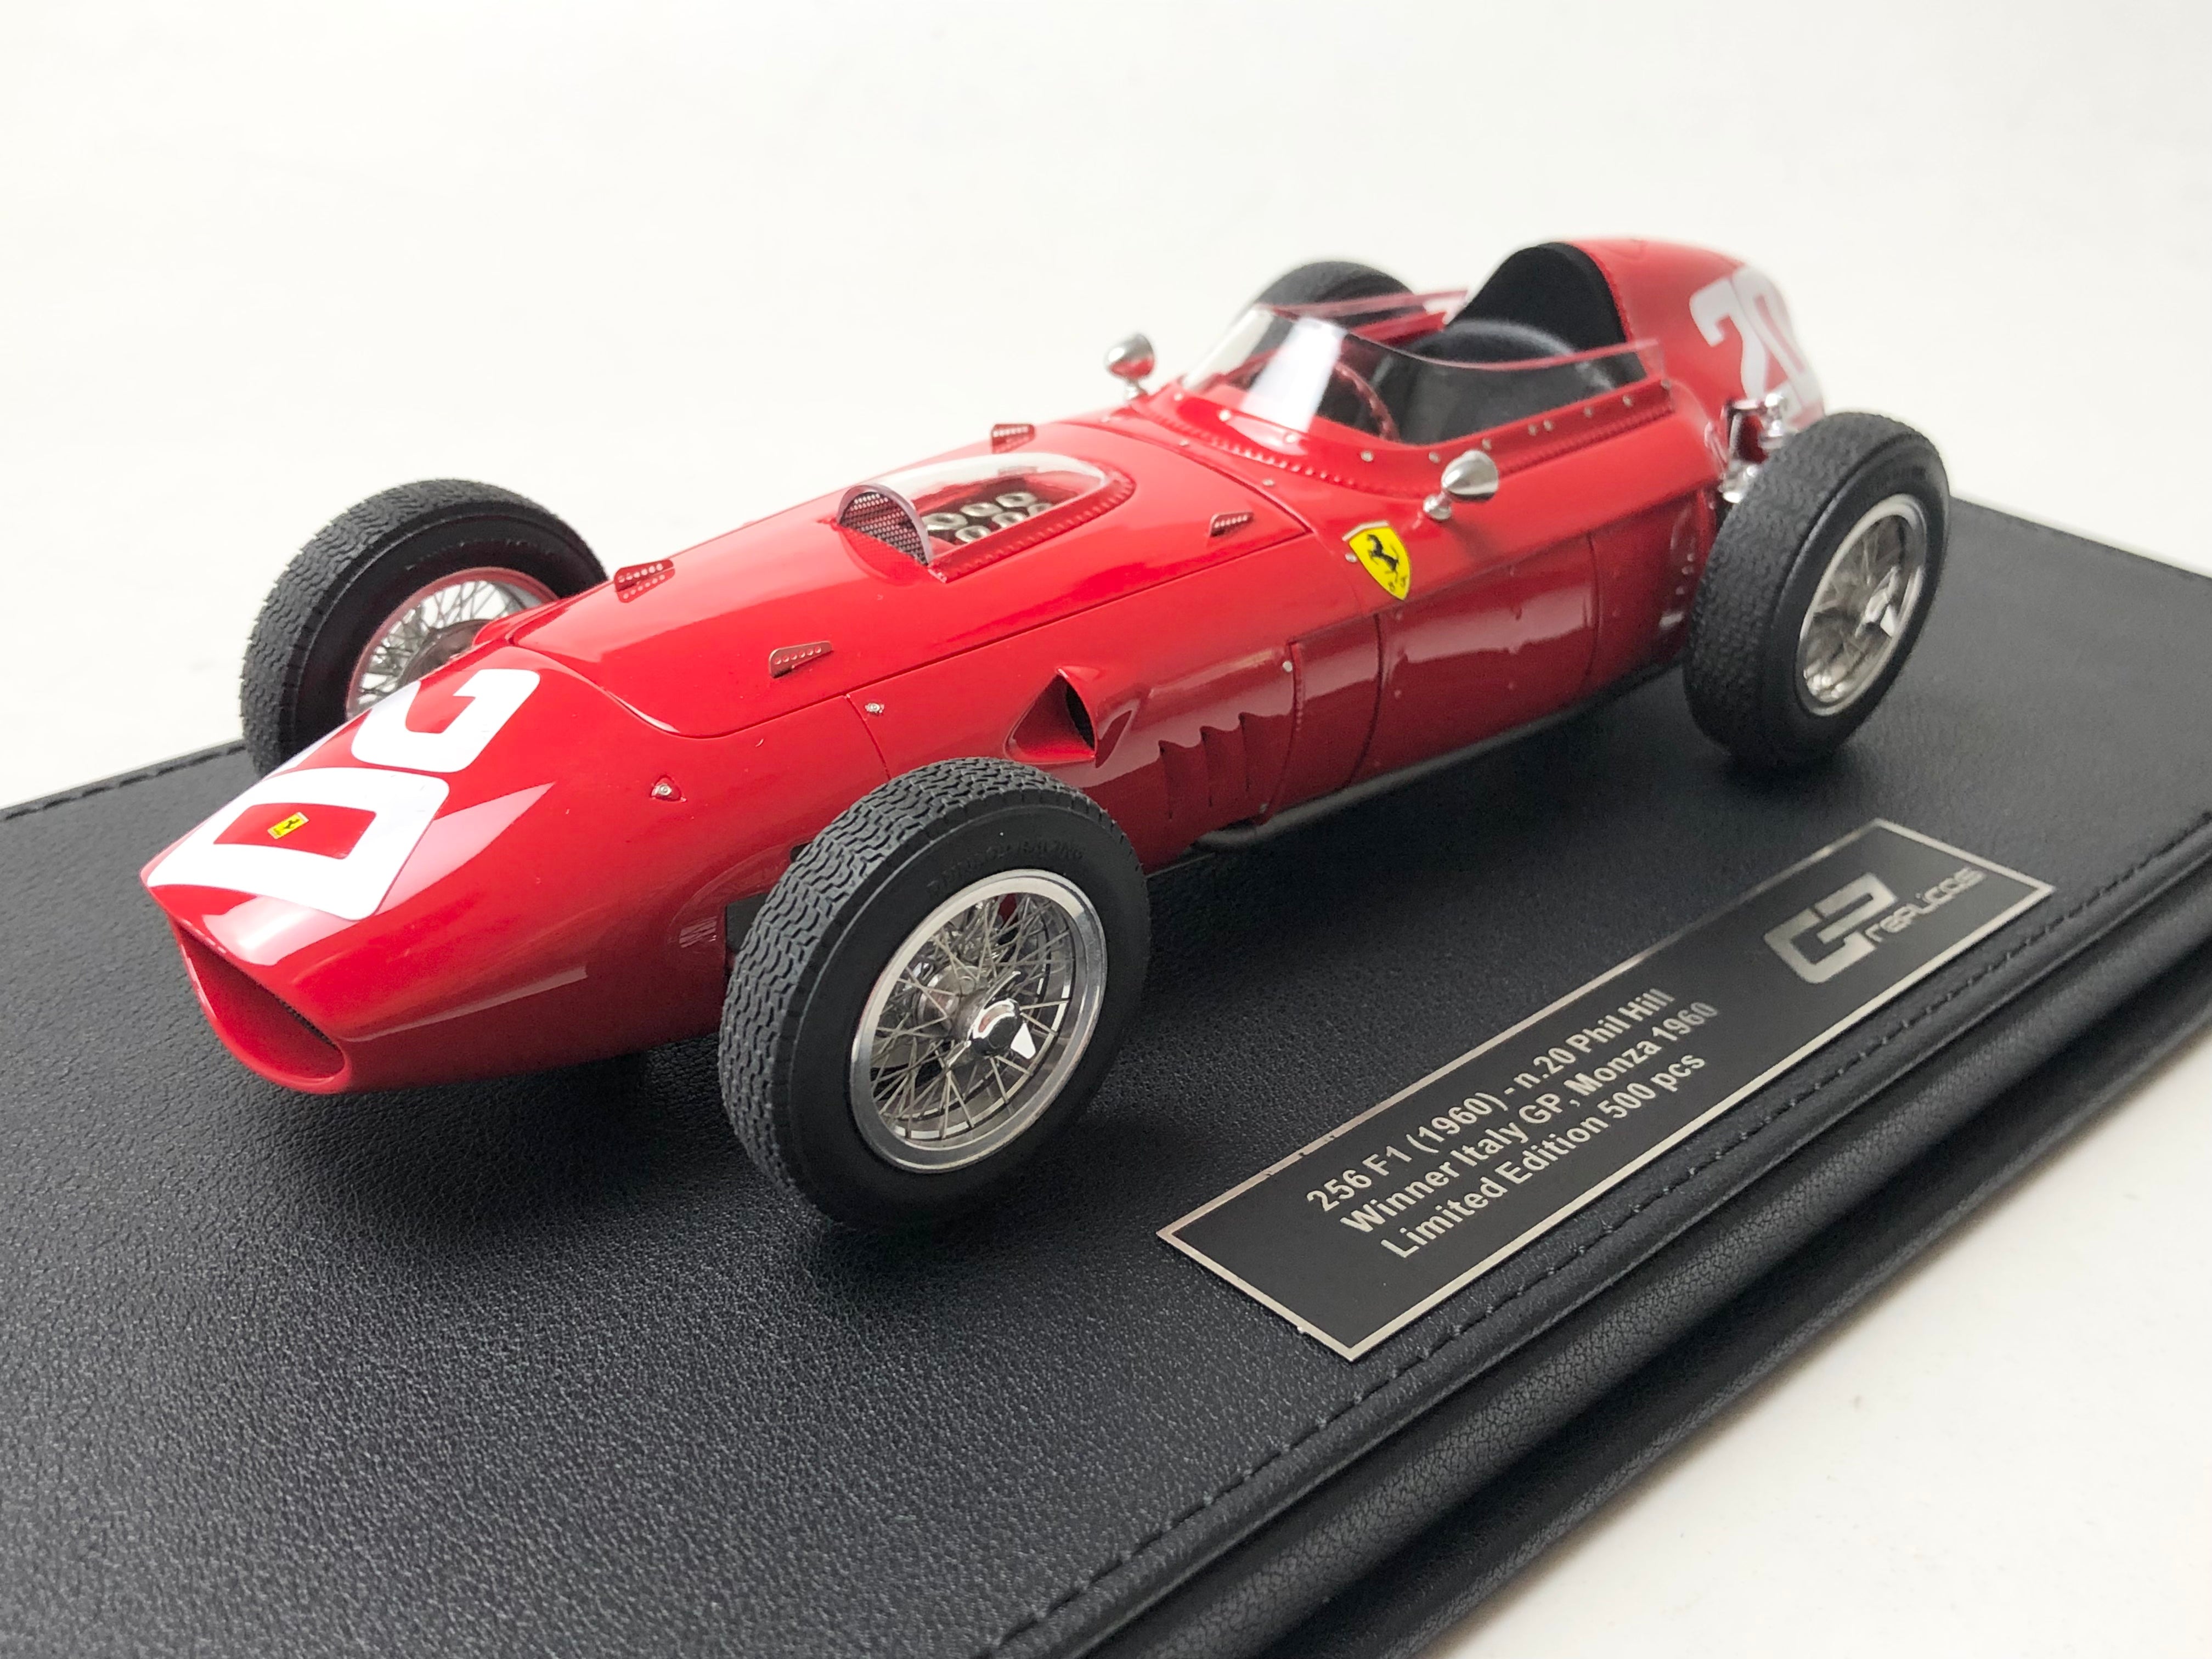 1960 Ferrari 256 F1 #20 Phil Hill, 1:18 scale